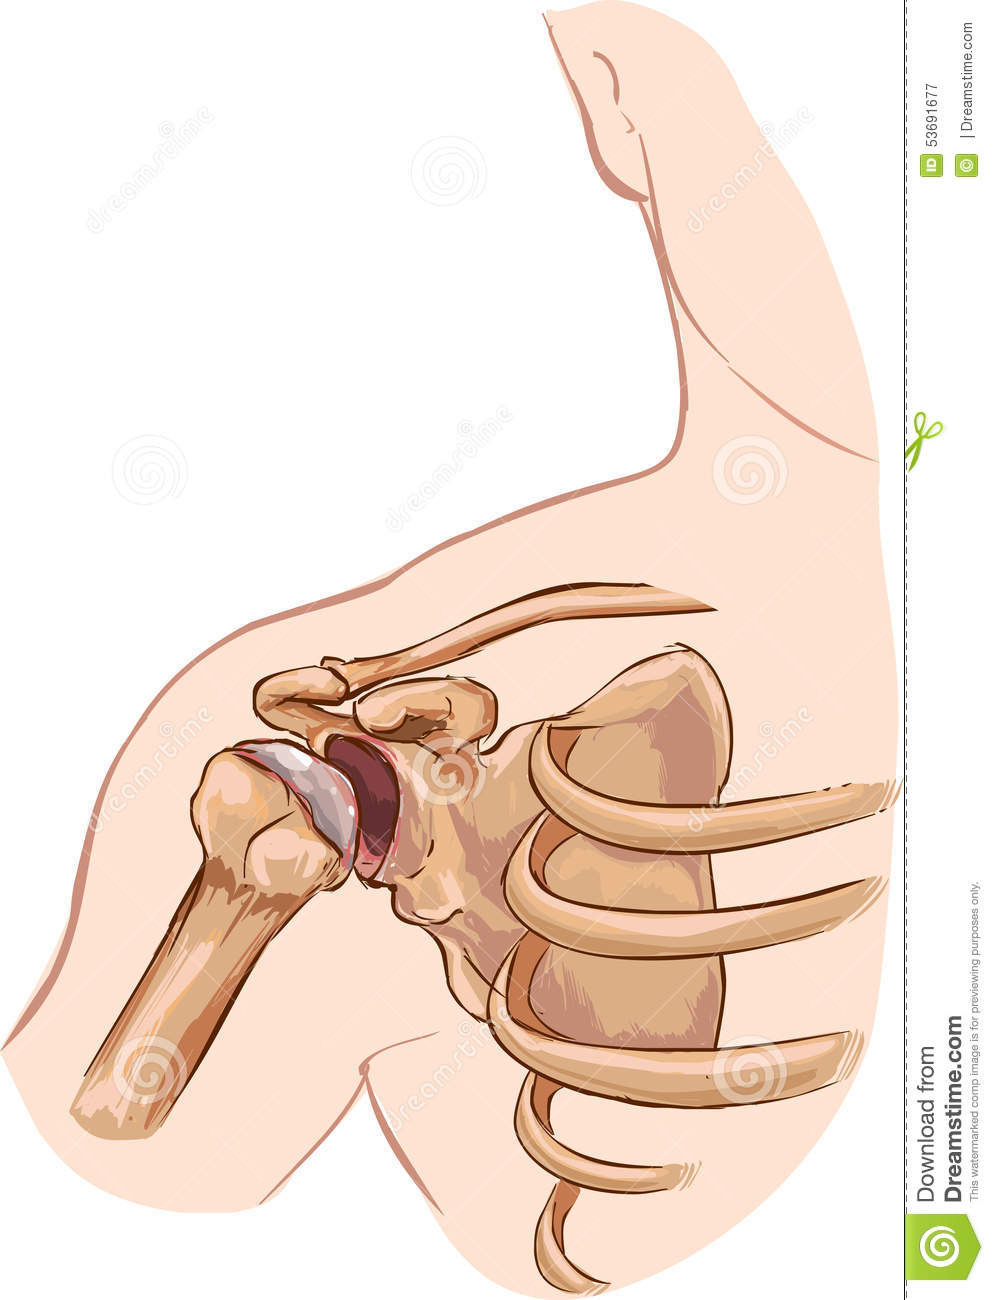 Vector Illustration Of Shoulder Dislocation